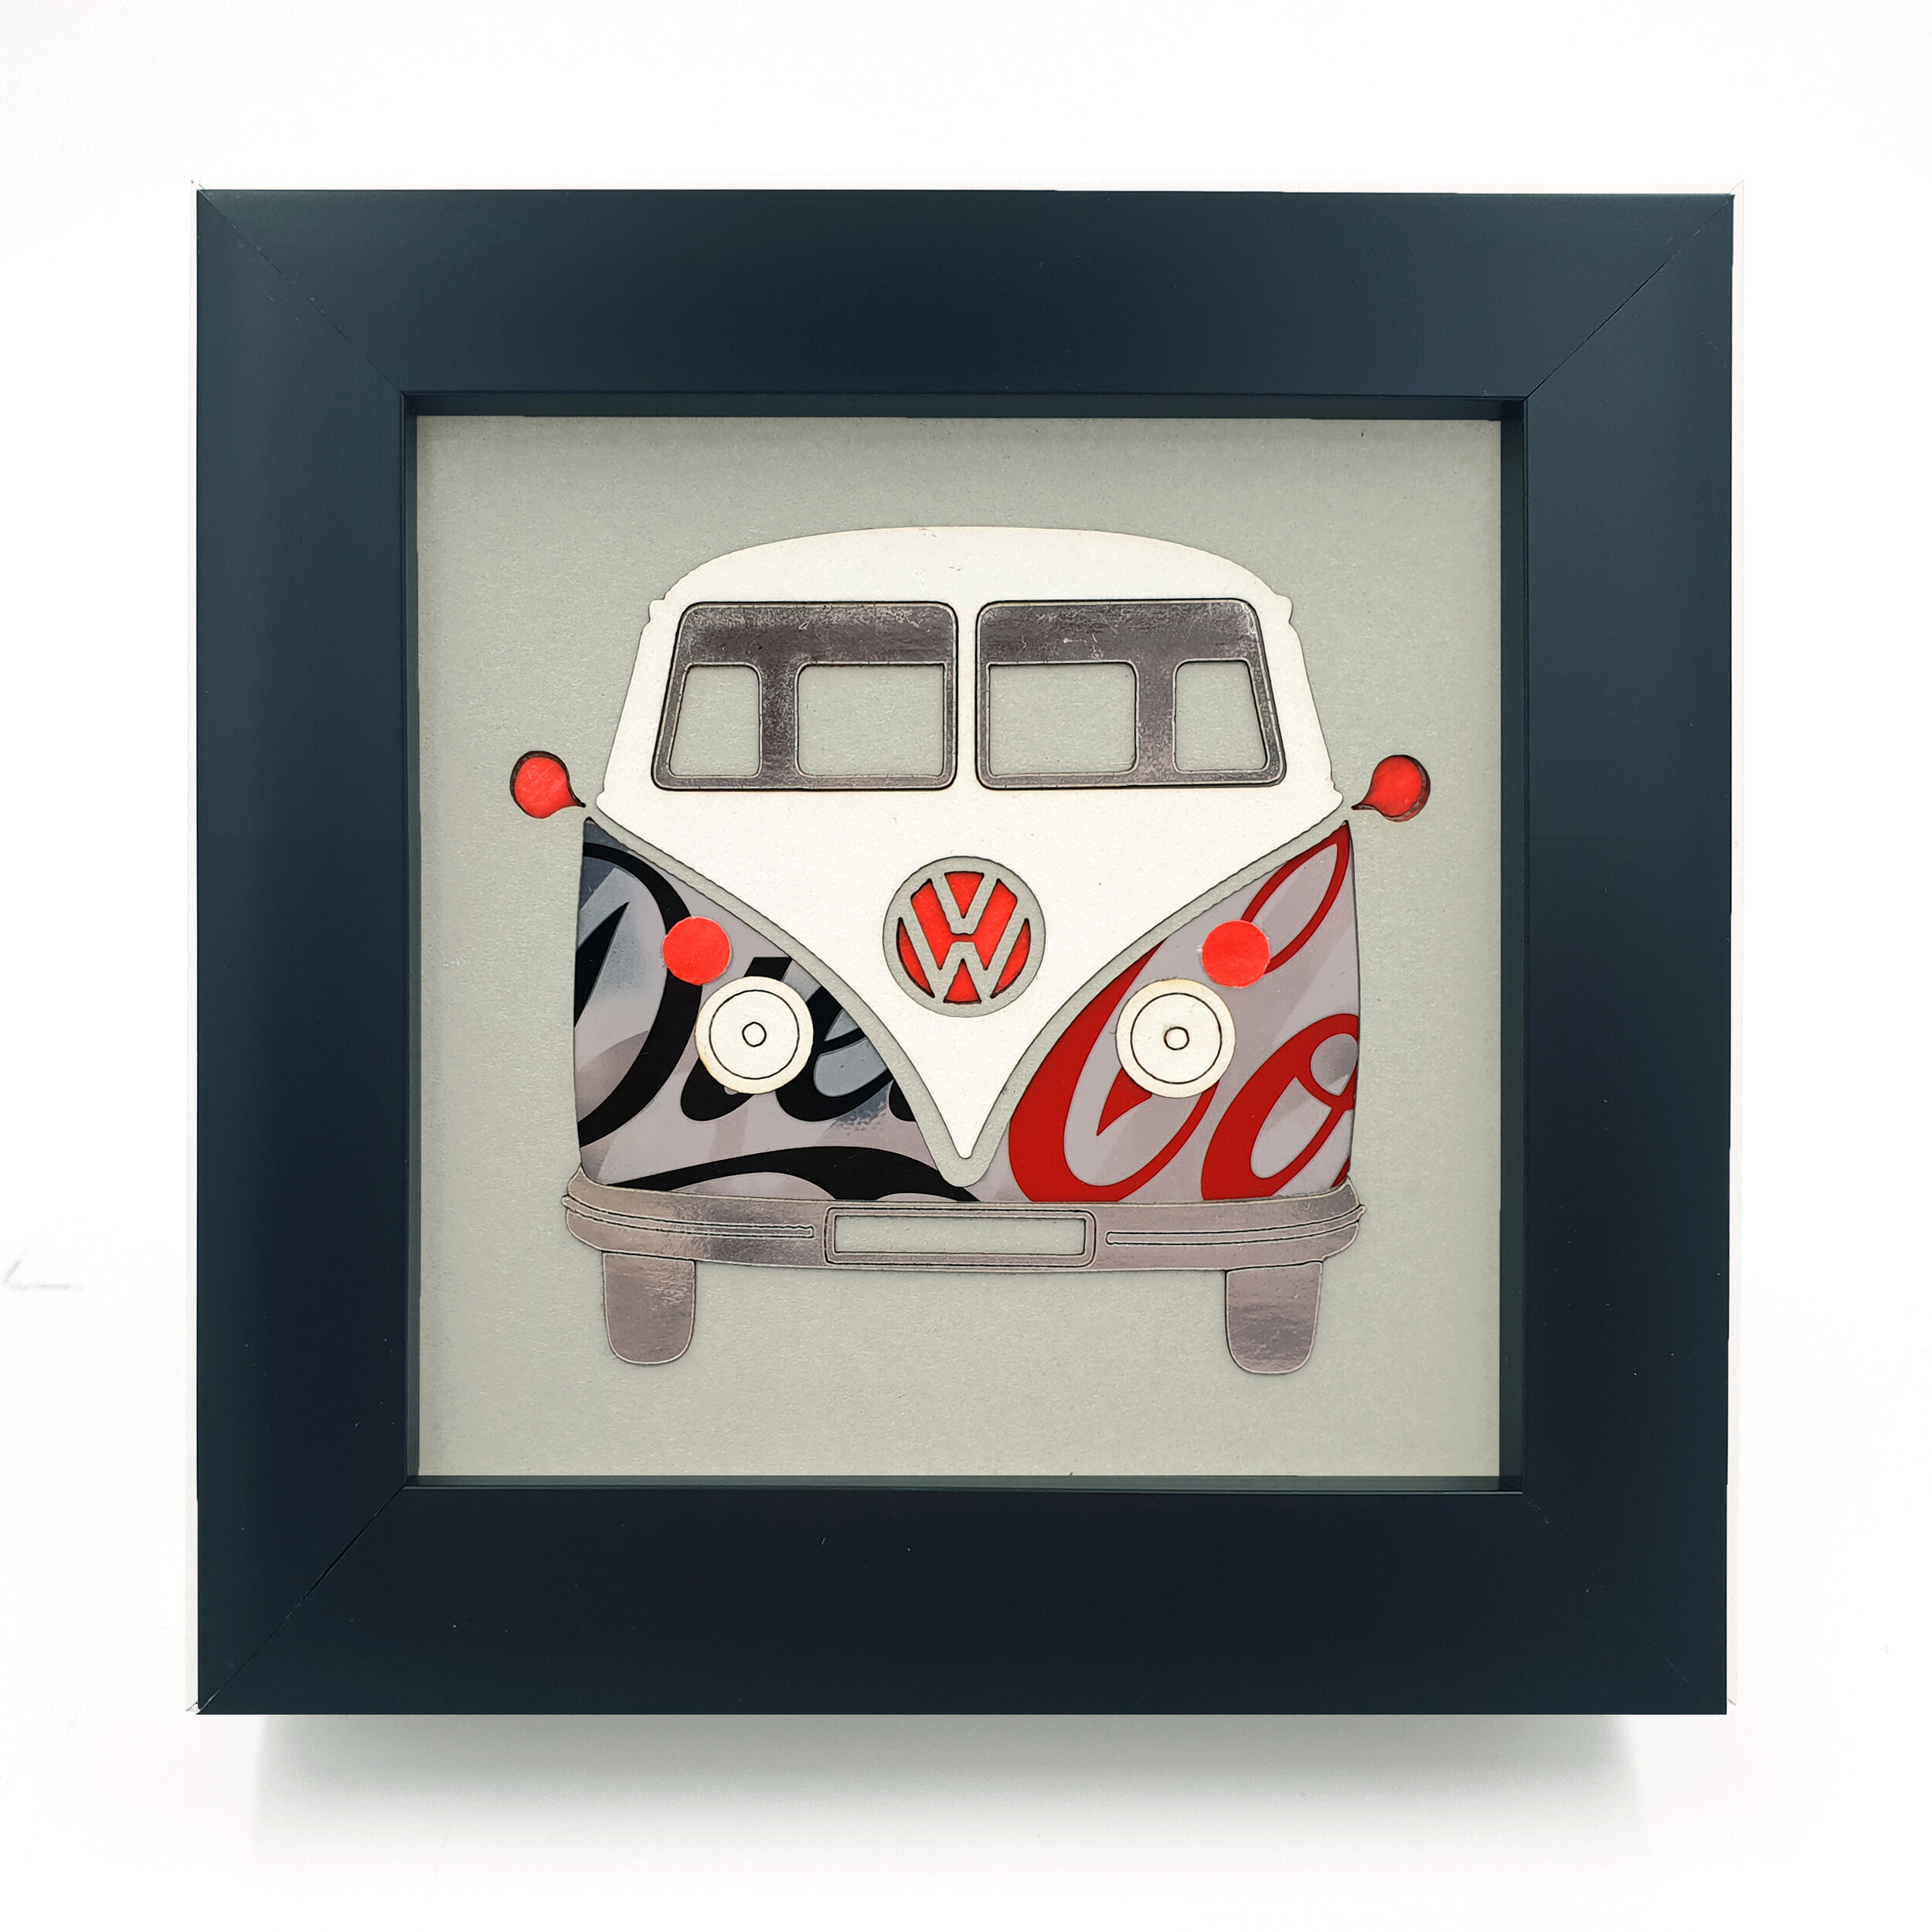 Silver Diet Coke retro VW camper van upcycled can art black frame